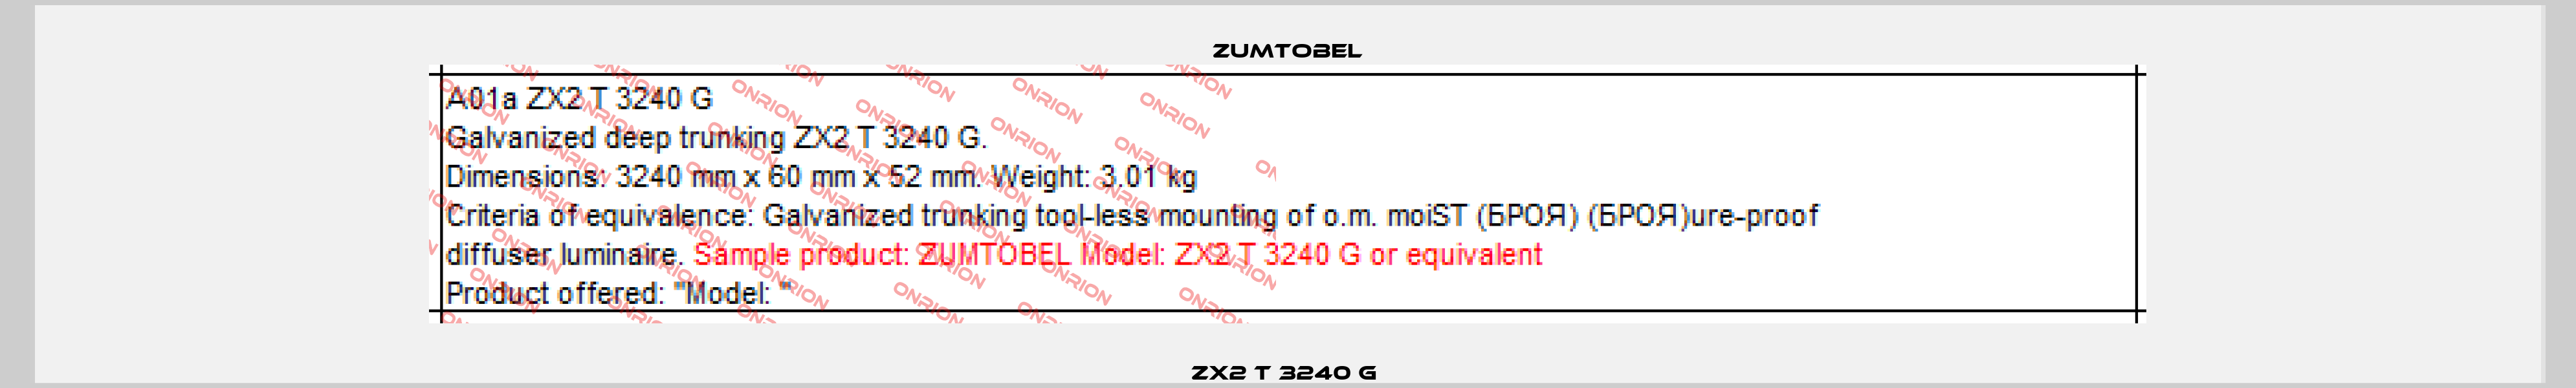 ZX2 T 3240 G  Zumtobel